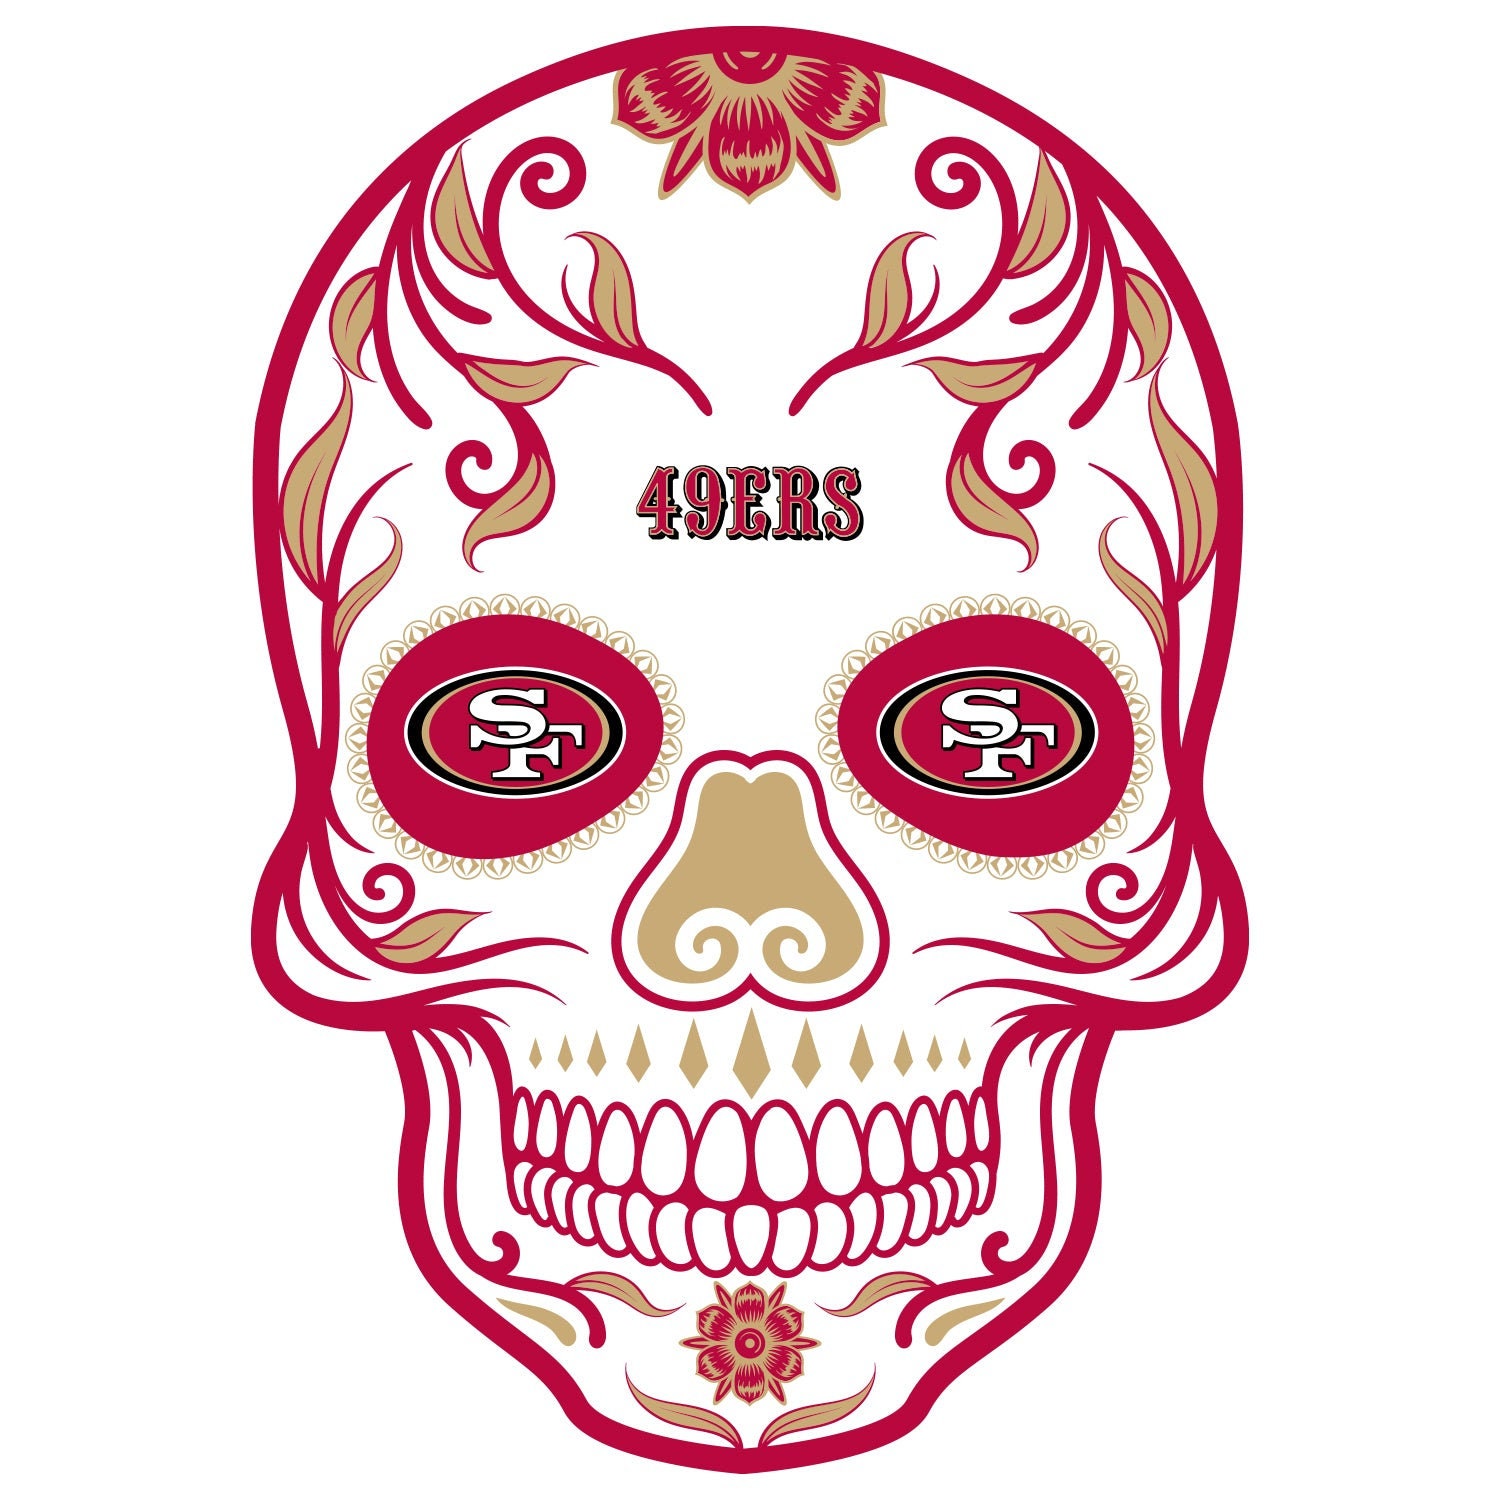 San Francisco Football Helmet Sugar Skull Day Of The Dead T-Shirt – Teezou  Store